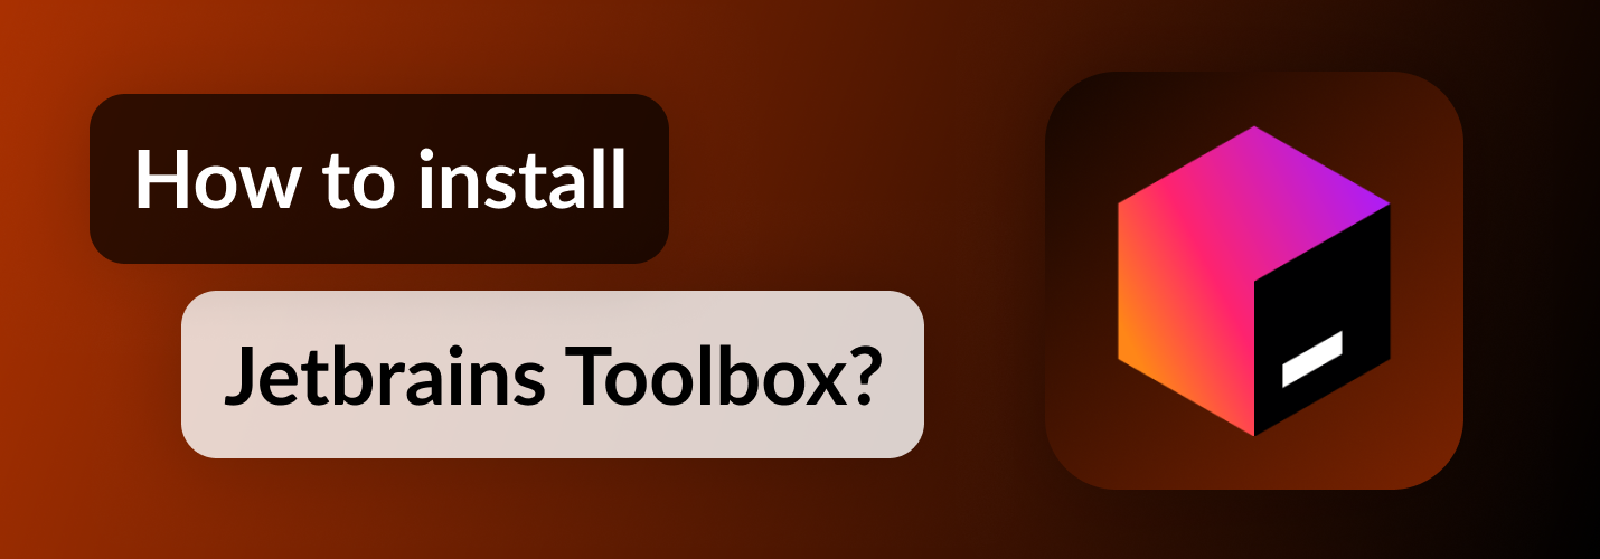 snap install jetbrains toolbox